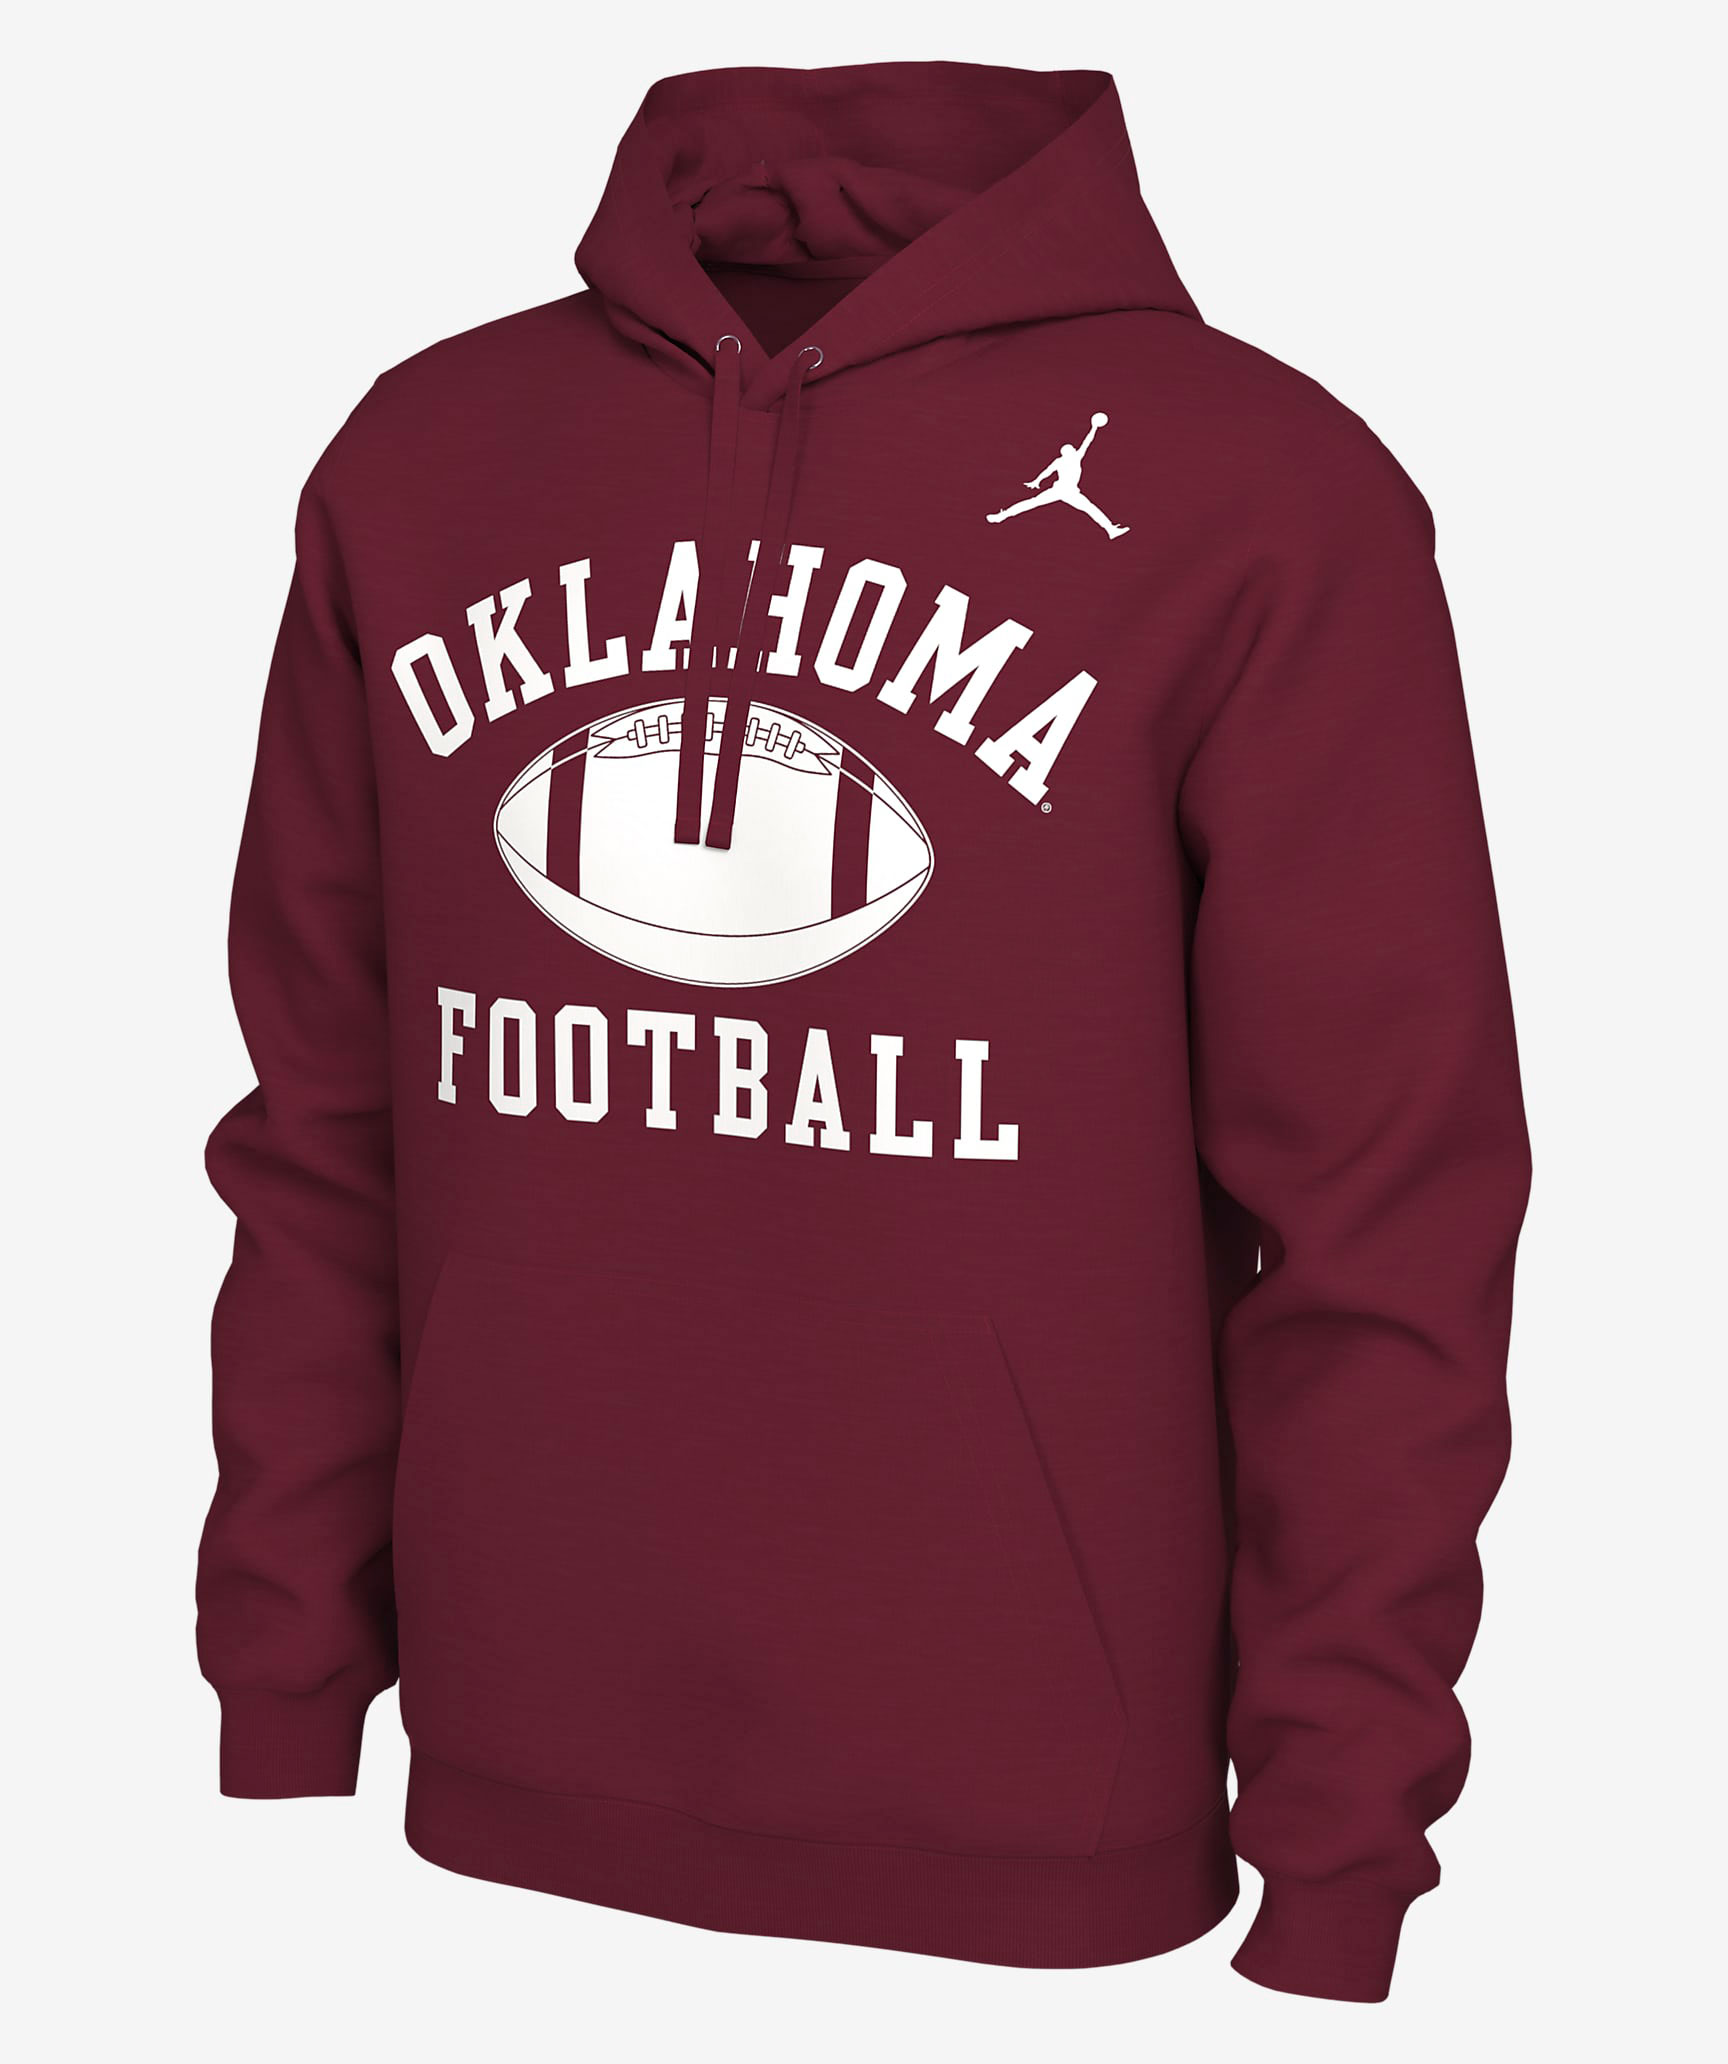 jordan-oklahoma-football-hoodie